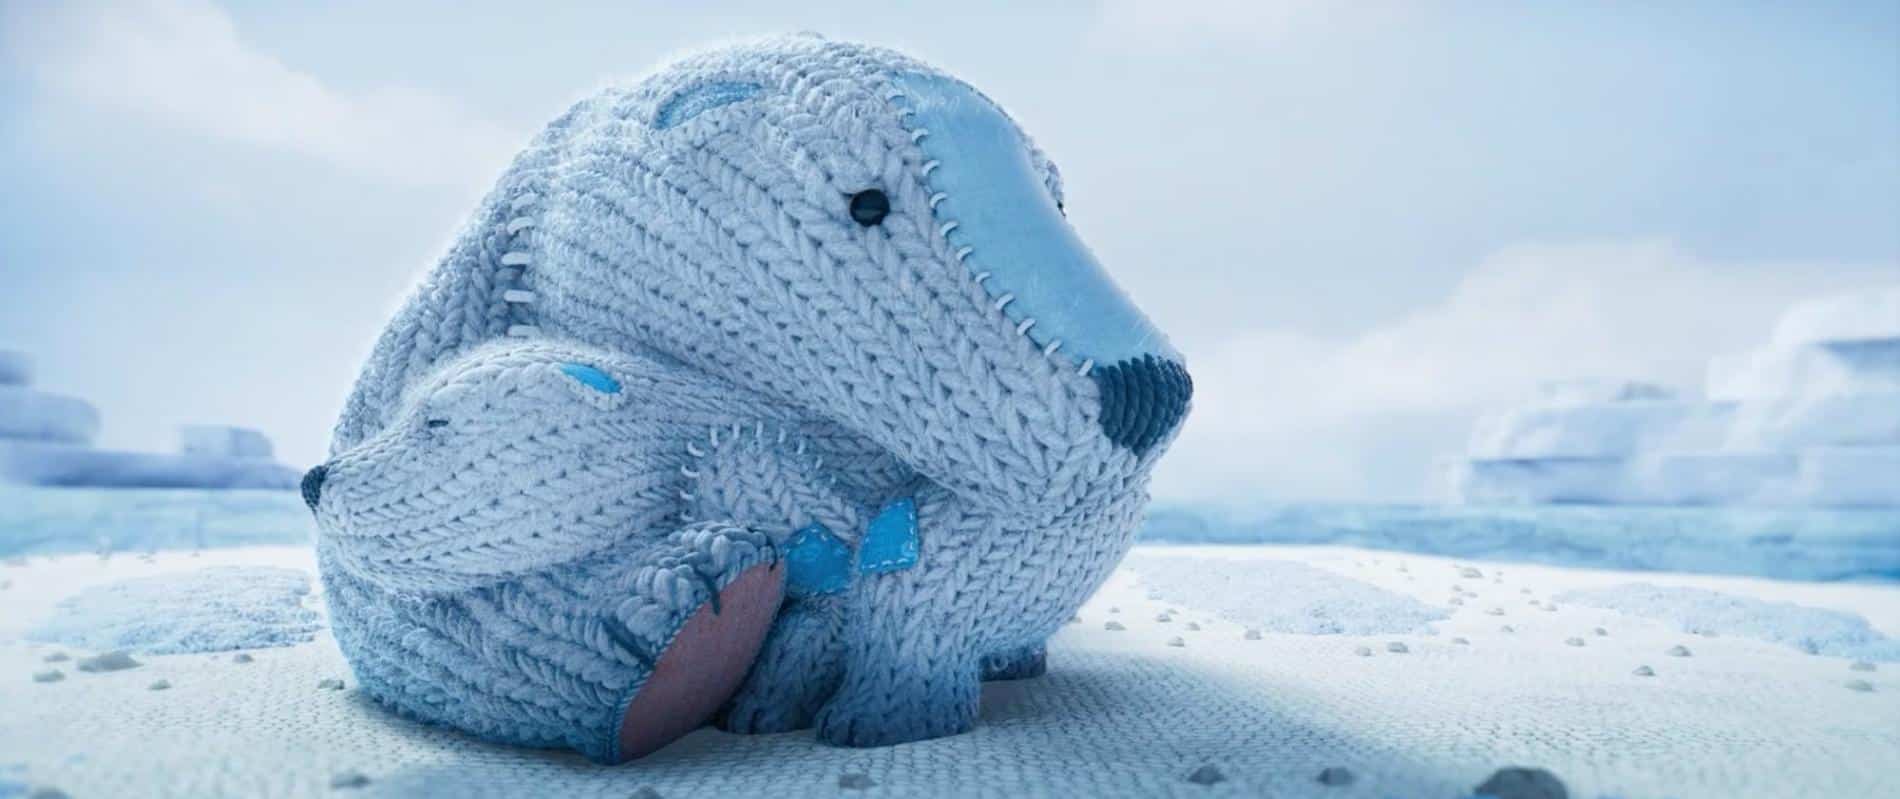 migrantes ososn polares de cortometraje tejidos en lana, mama y cria de osos polar